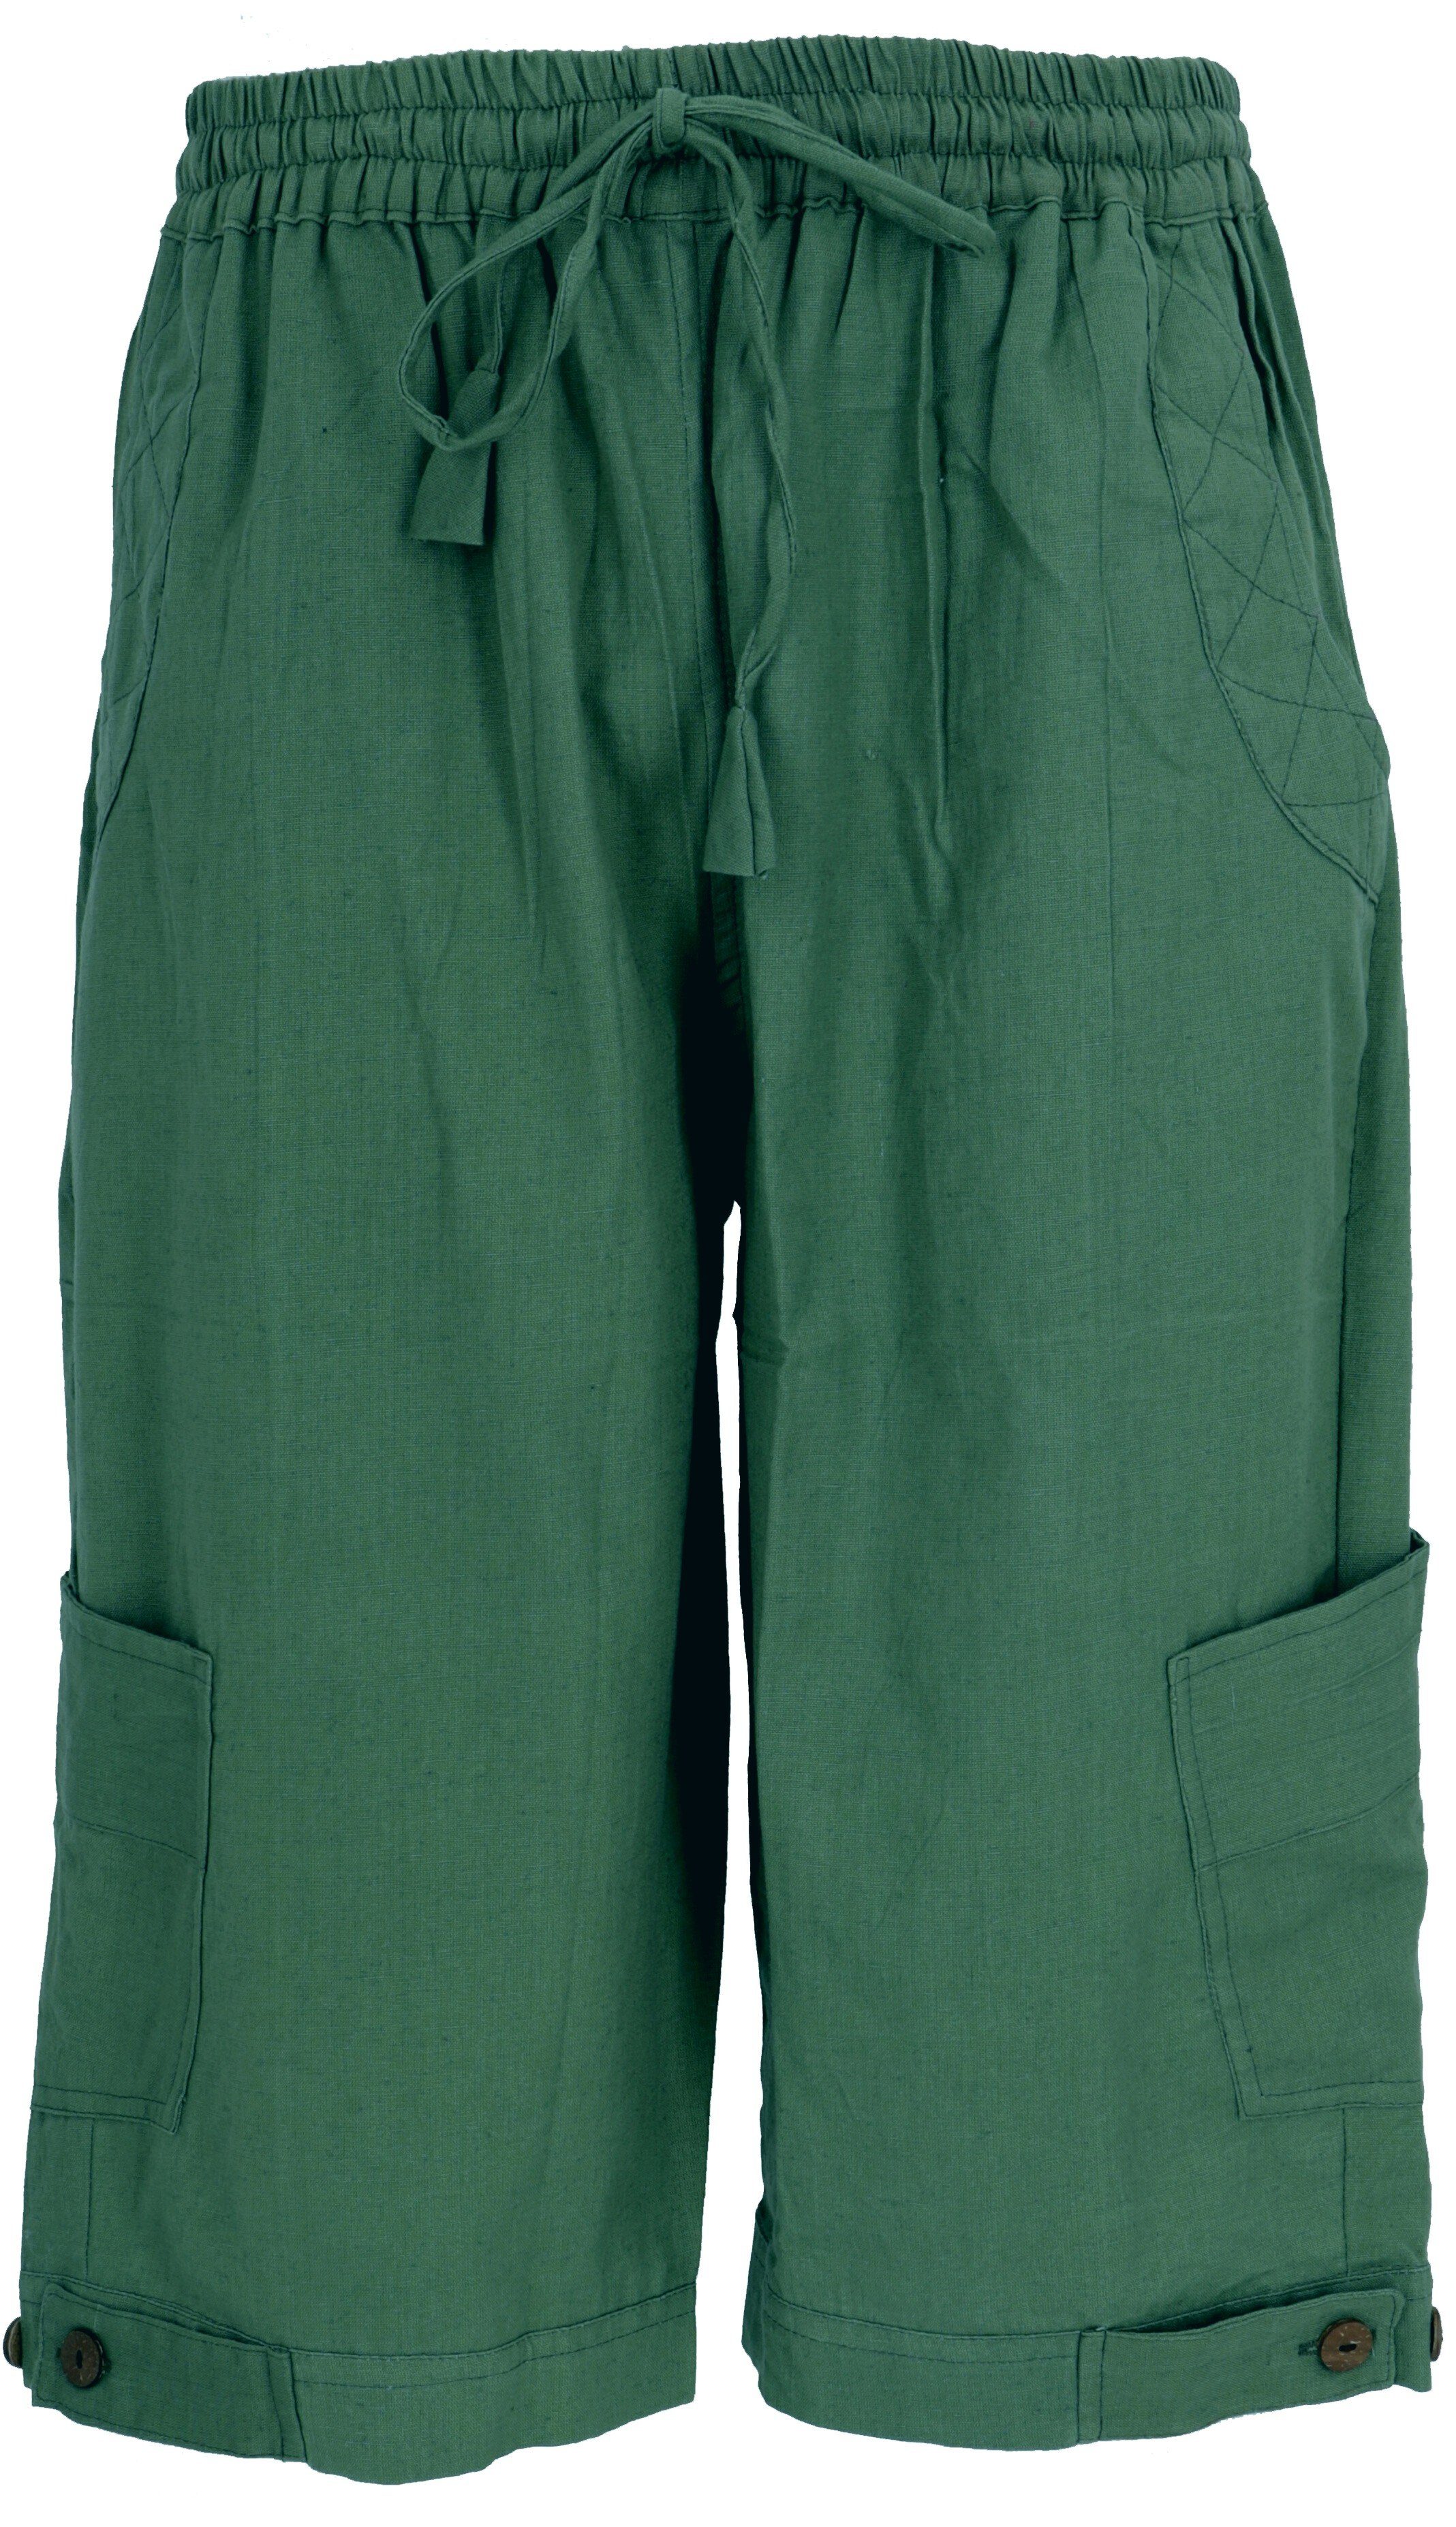 Goa alternative Goa Bekleidung Ethno Guru-Shop - grün Yogahose, Style, Relaxhose Hose, 3/4 Shorts